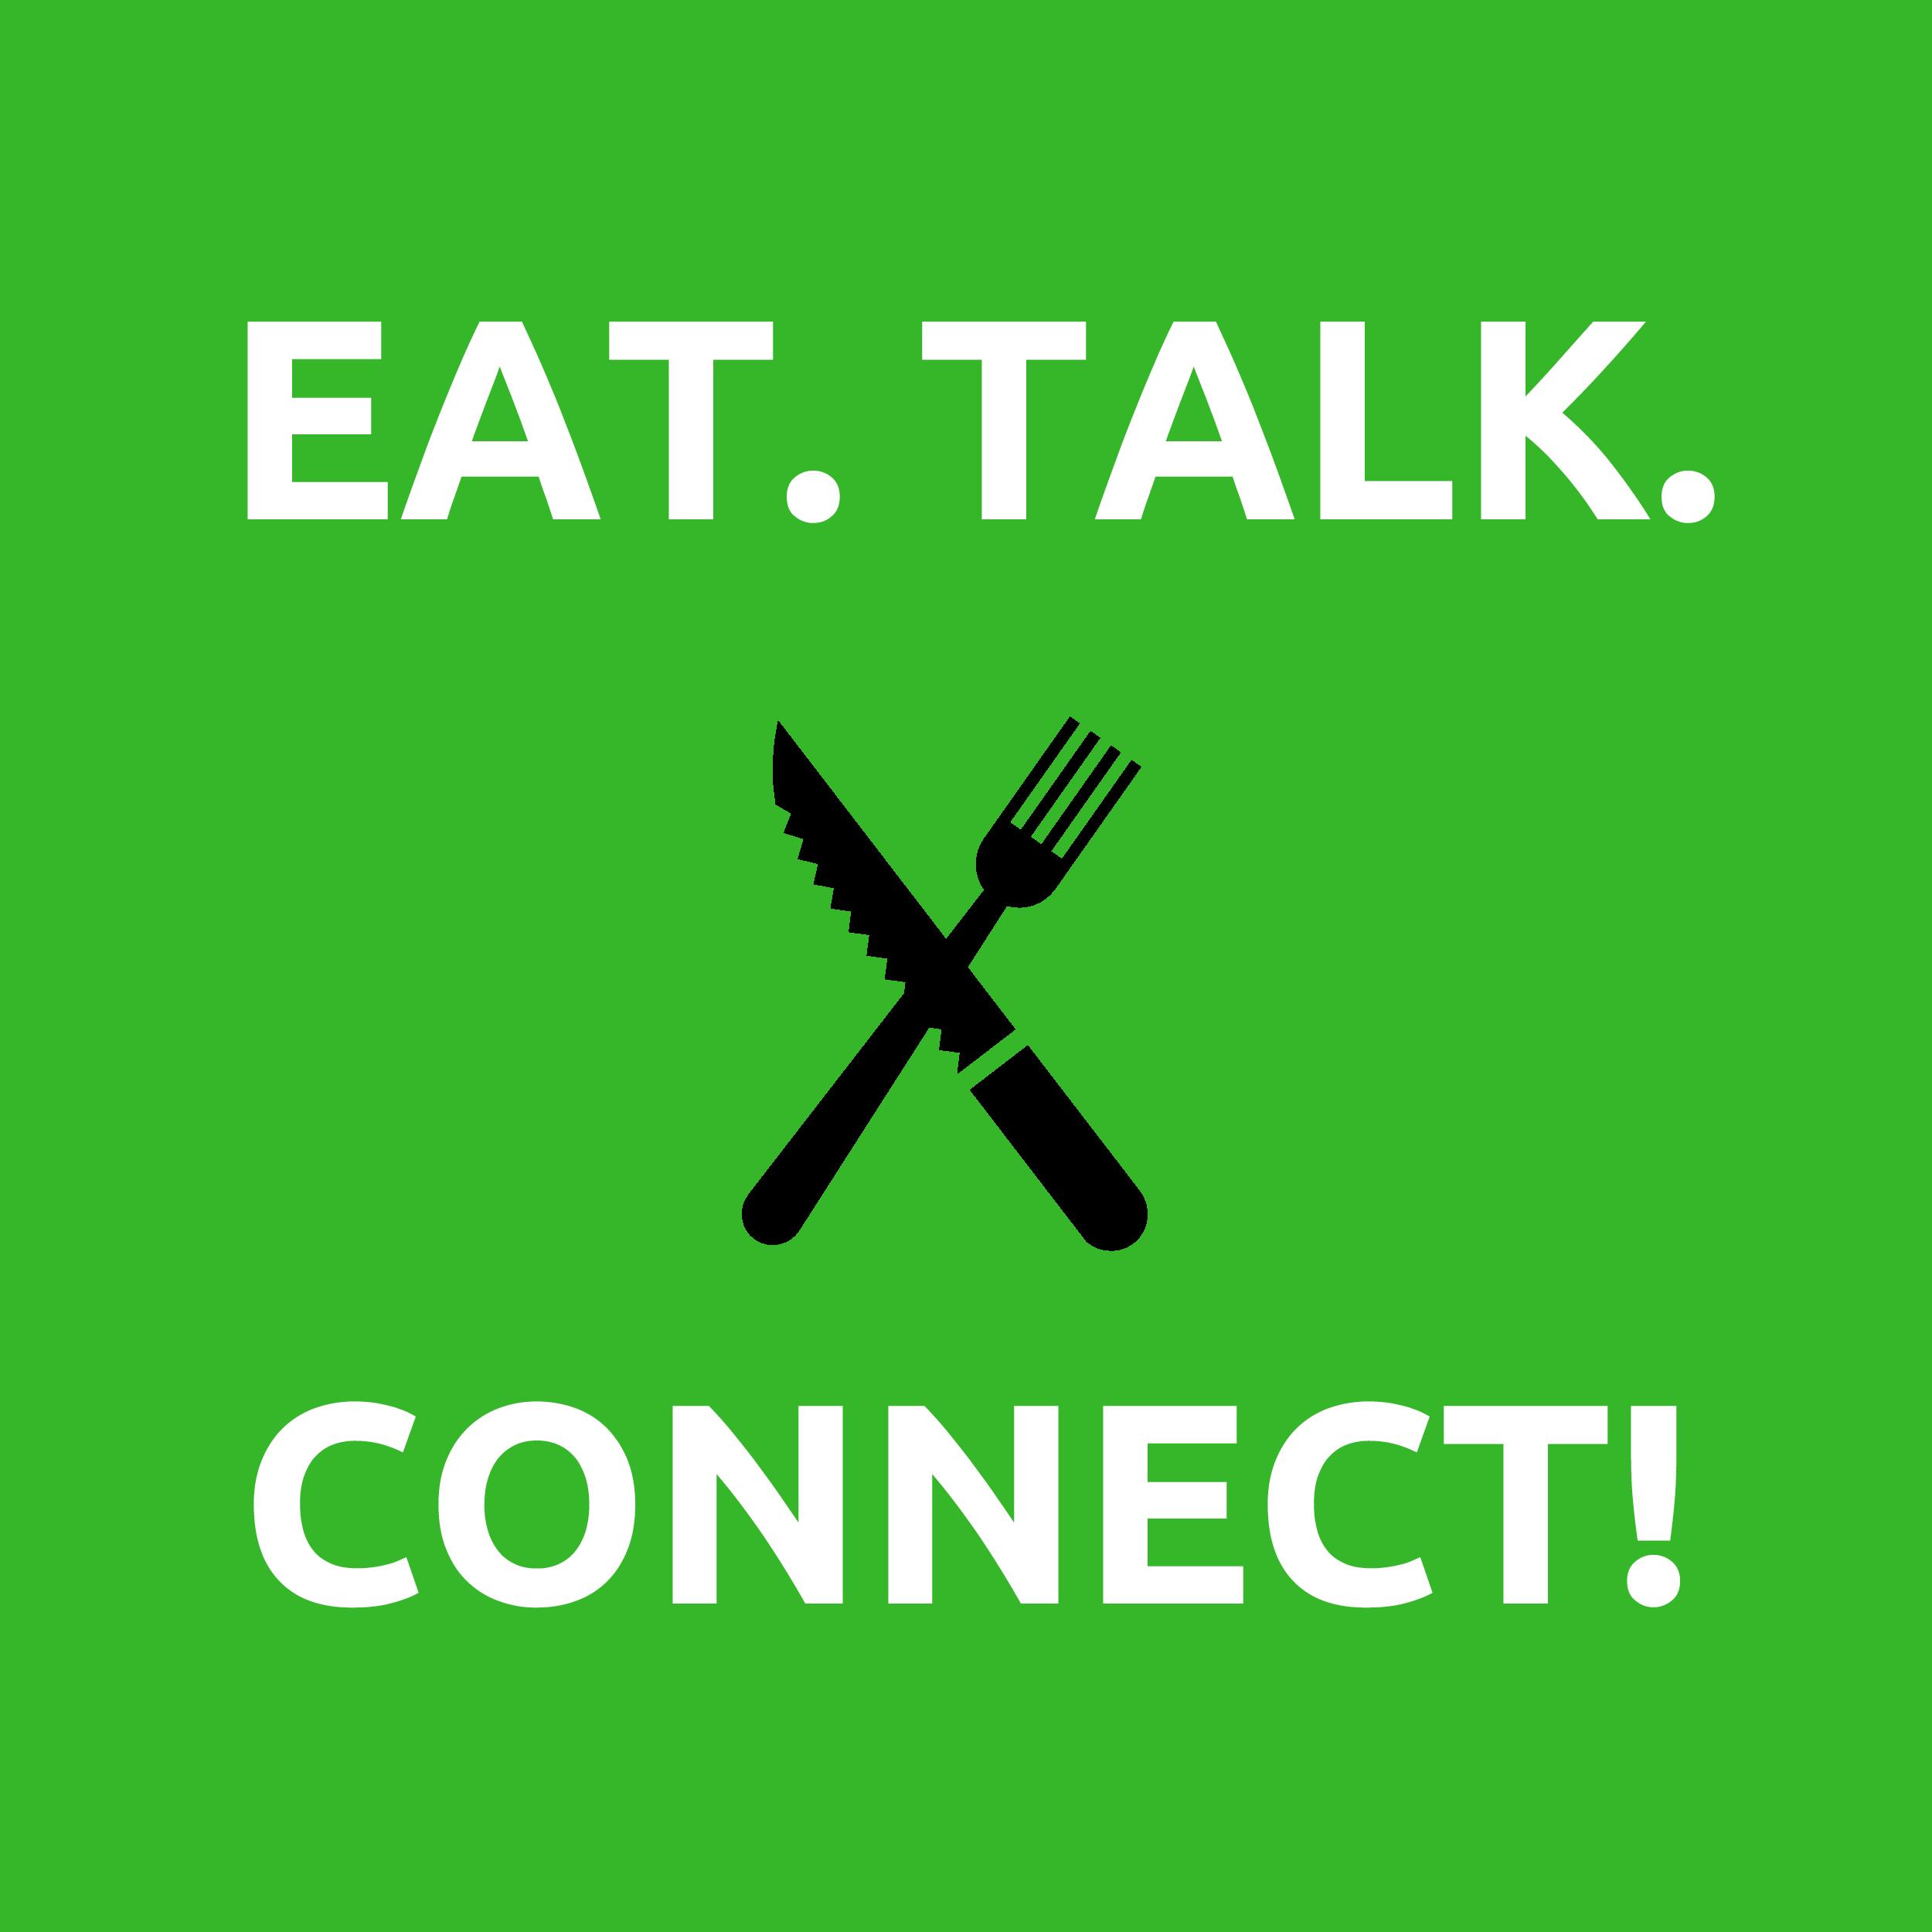 Comer. Habla. Conéctate.